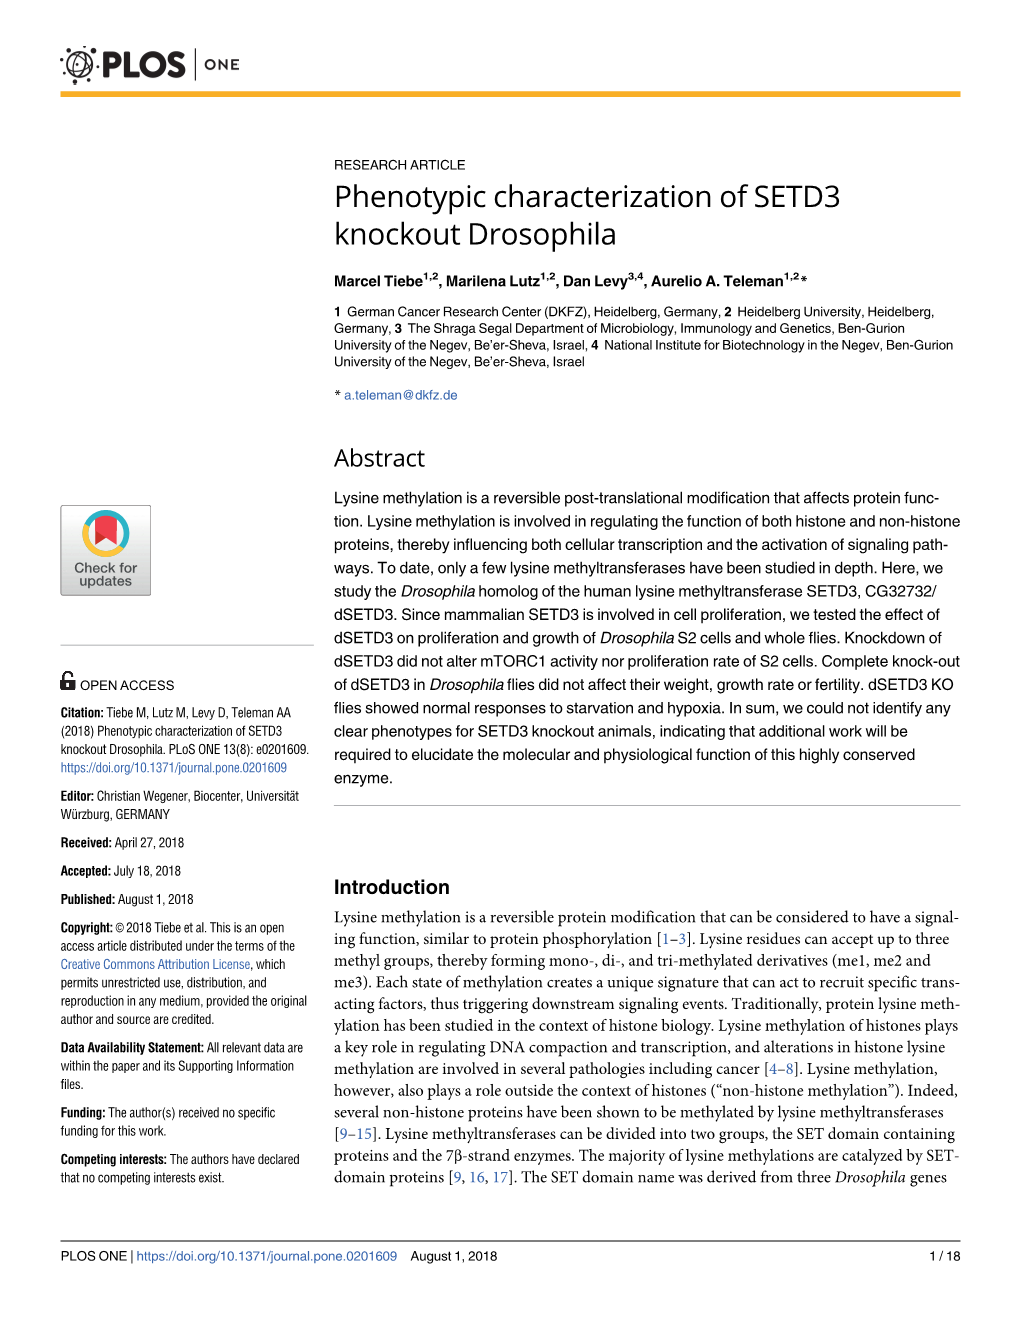 Phenotypic Characterization of SETD3 Knockout Drosophila